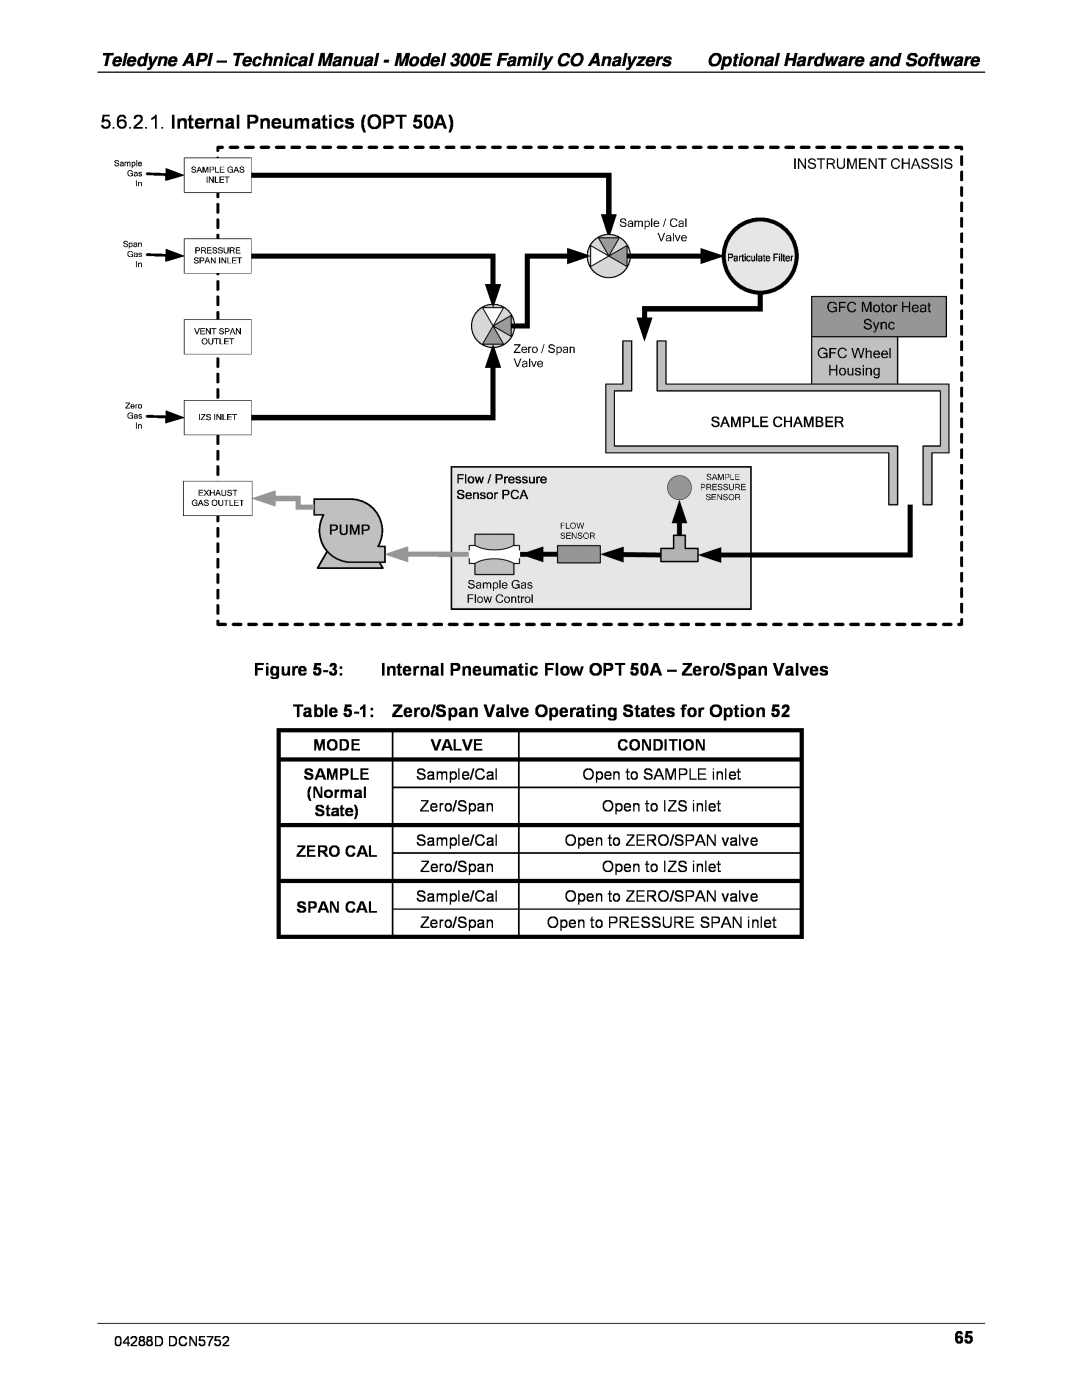 Teledyne M300EM operation manual Internal Pneumatics OPT 50A, Figure 